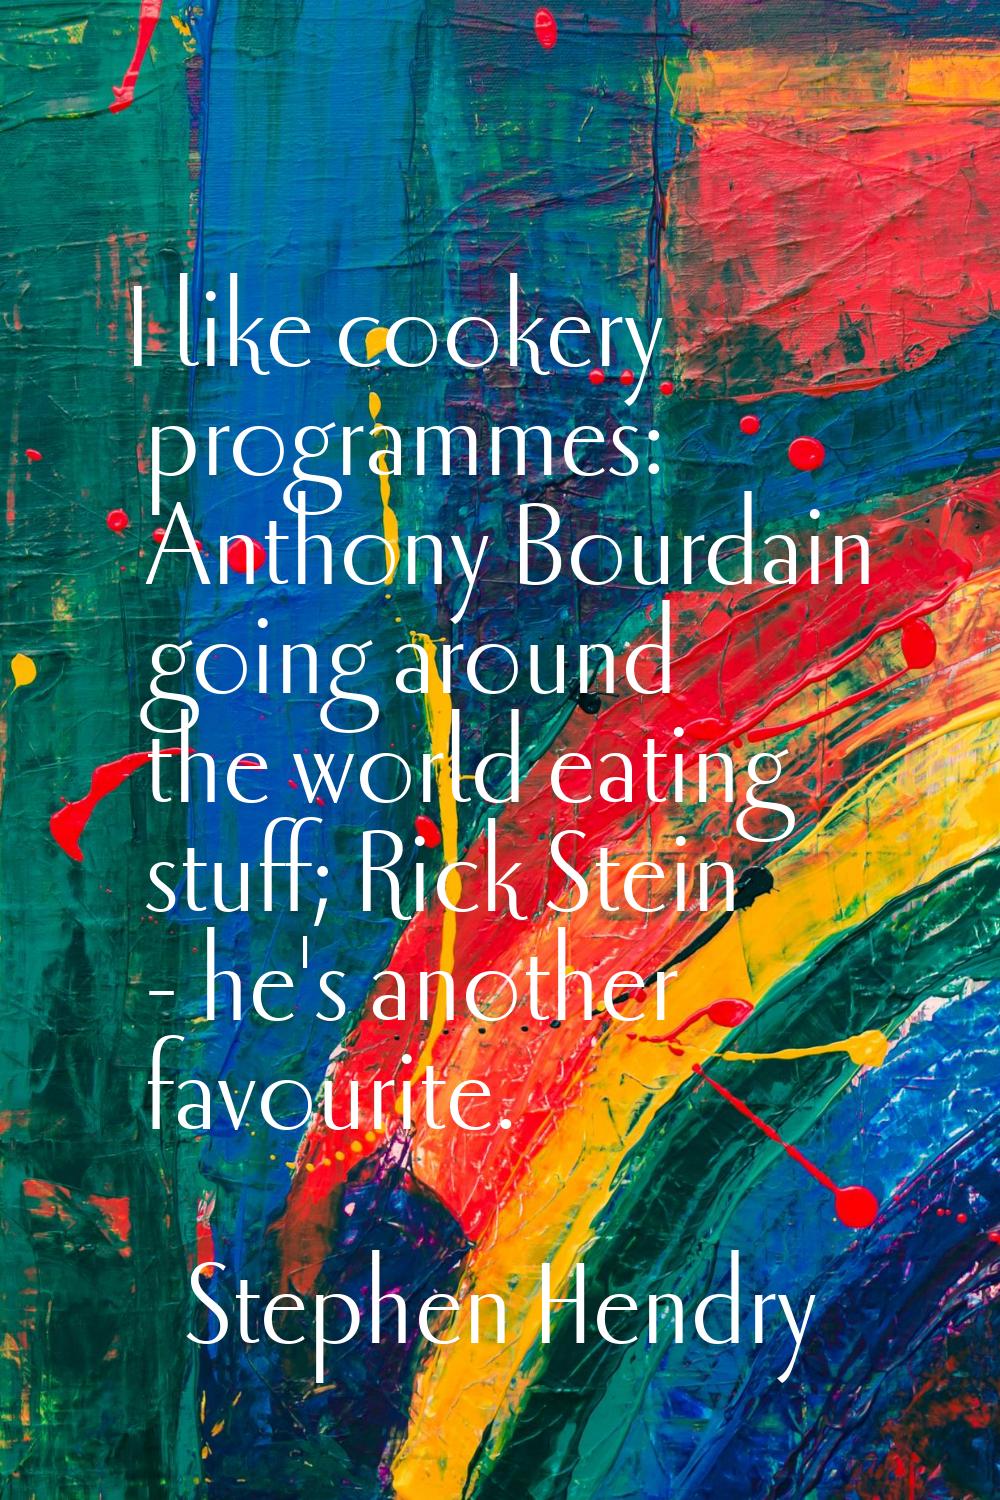 I like cookery programmes: Anthony Bourdain going around the world eating stuff; Rick Stein - he's 